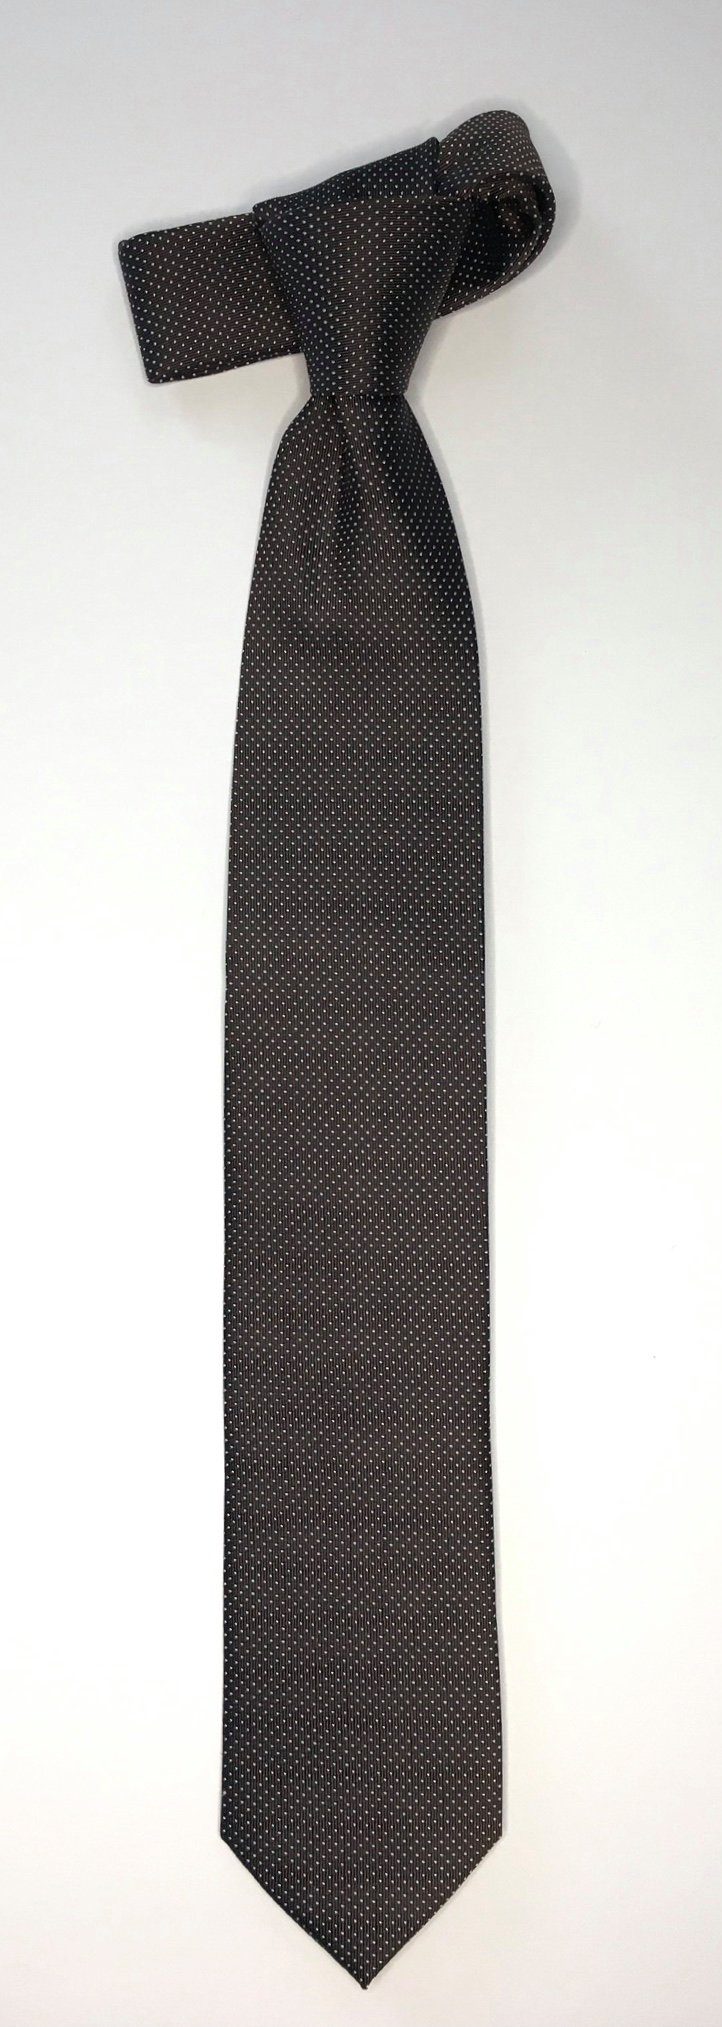 6cm Picoté Seidenfalter edlen Braun im Krawatte Seidenfalter Seidenfalter Krawatte Krawatte Design Picoté